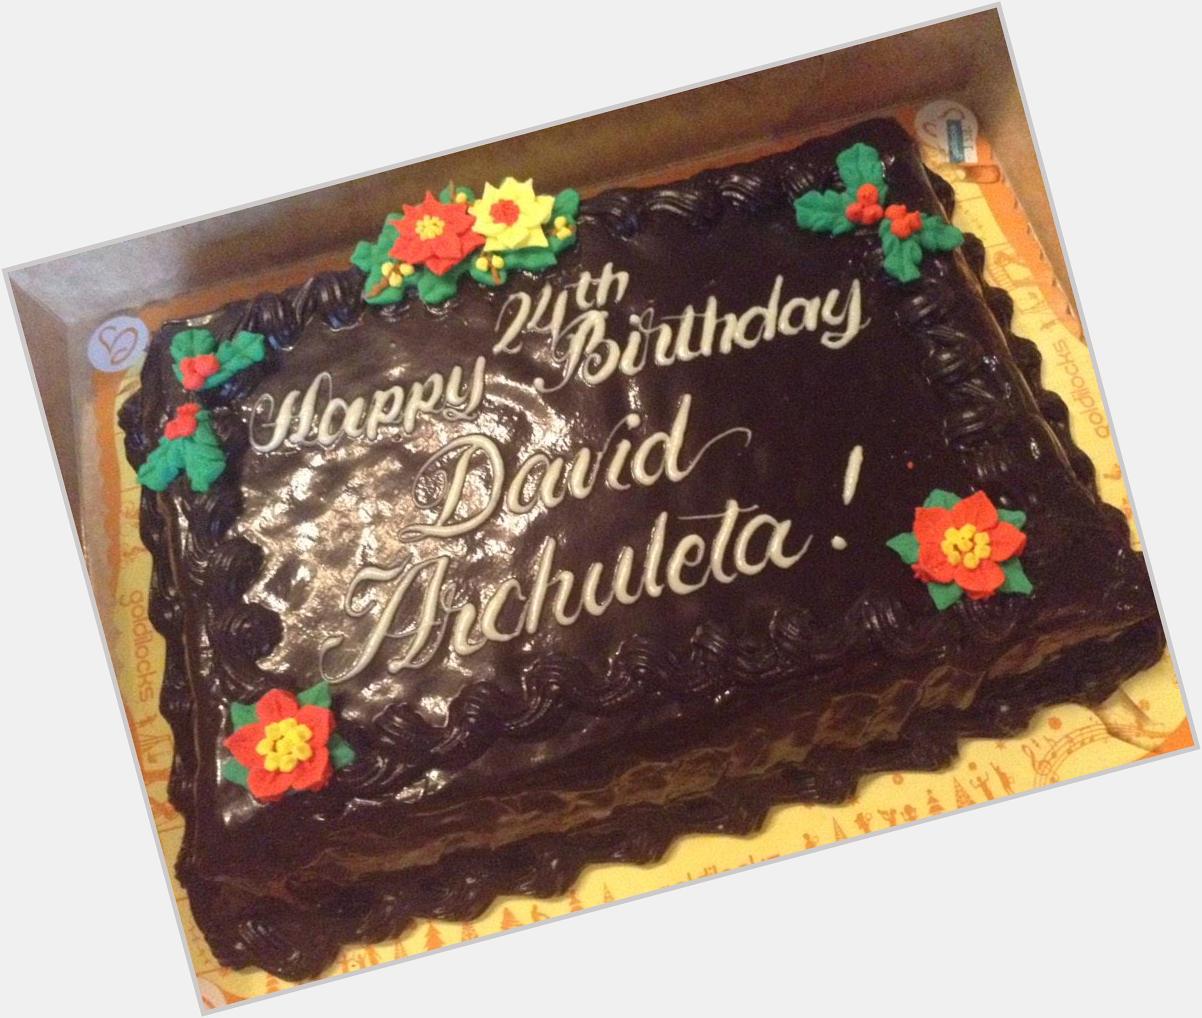 Last Minute Greetings !!!
Happy 24th Birthday David Archuleta !!!  